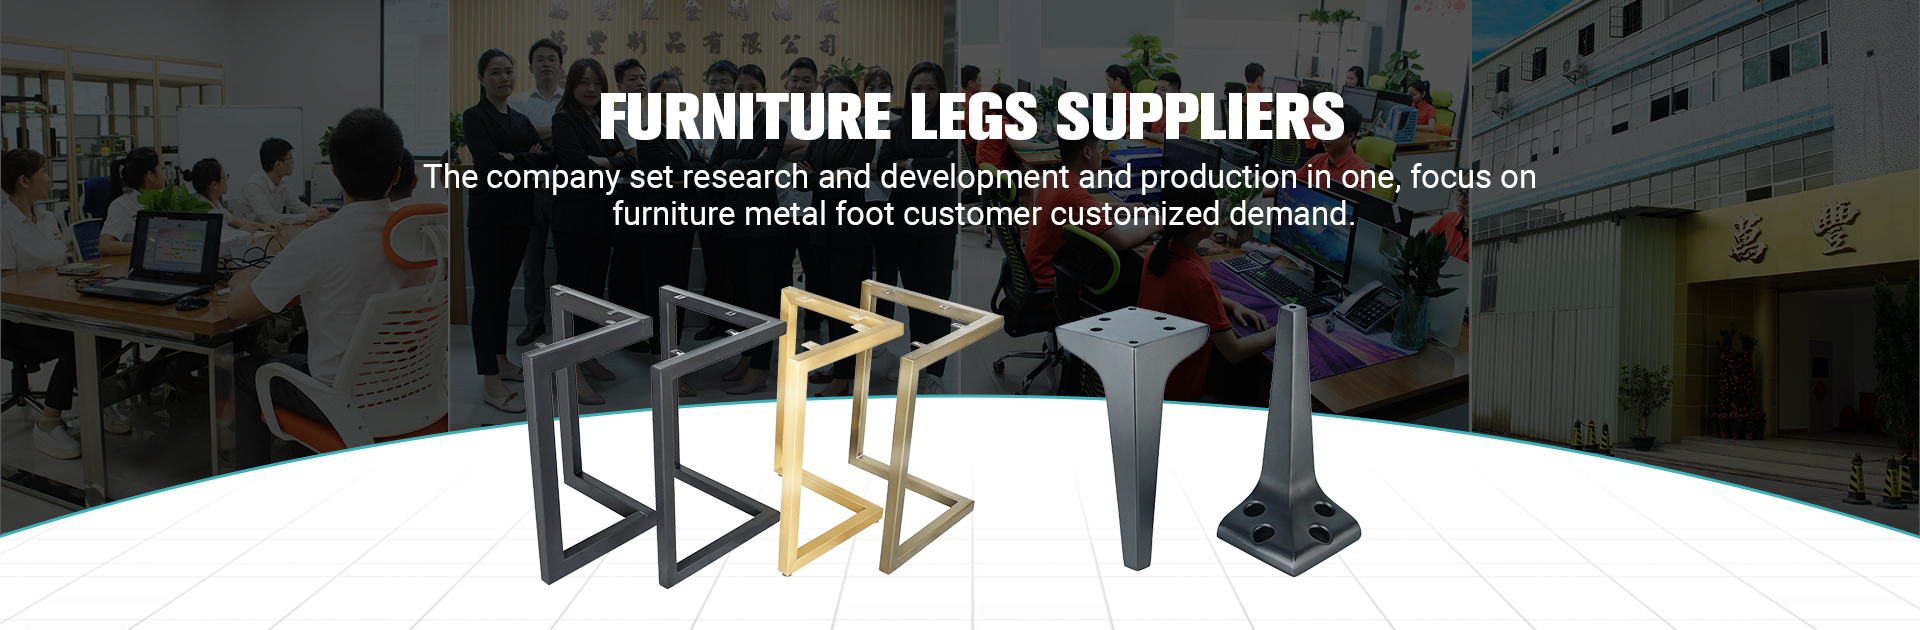 metal sofa legs suppliers